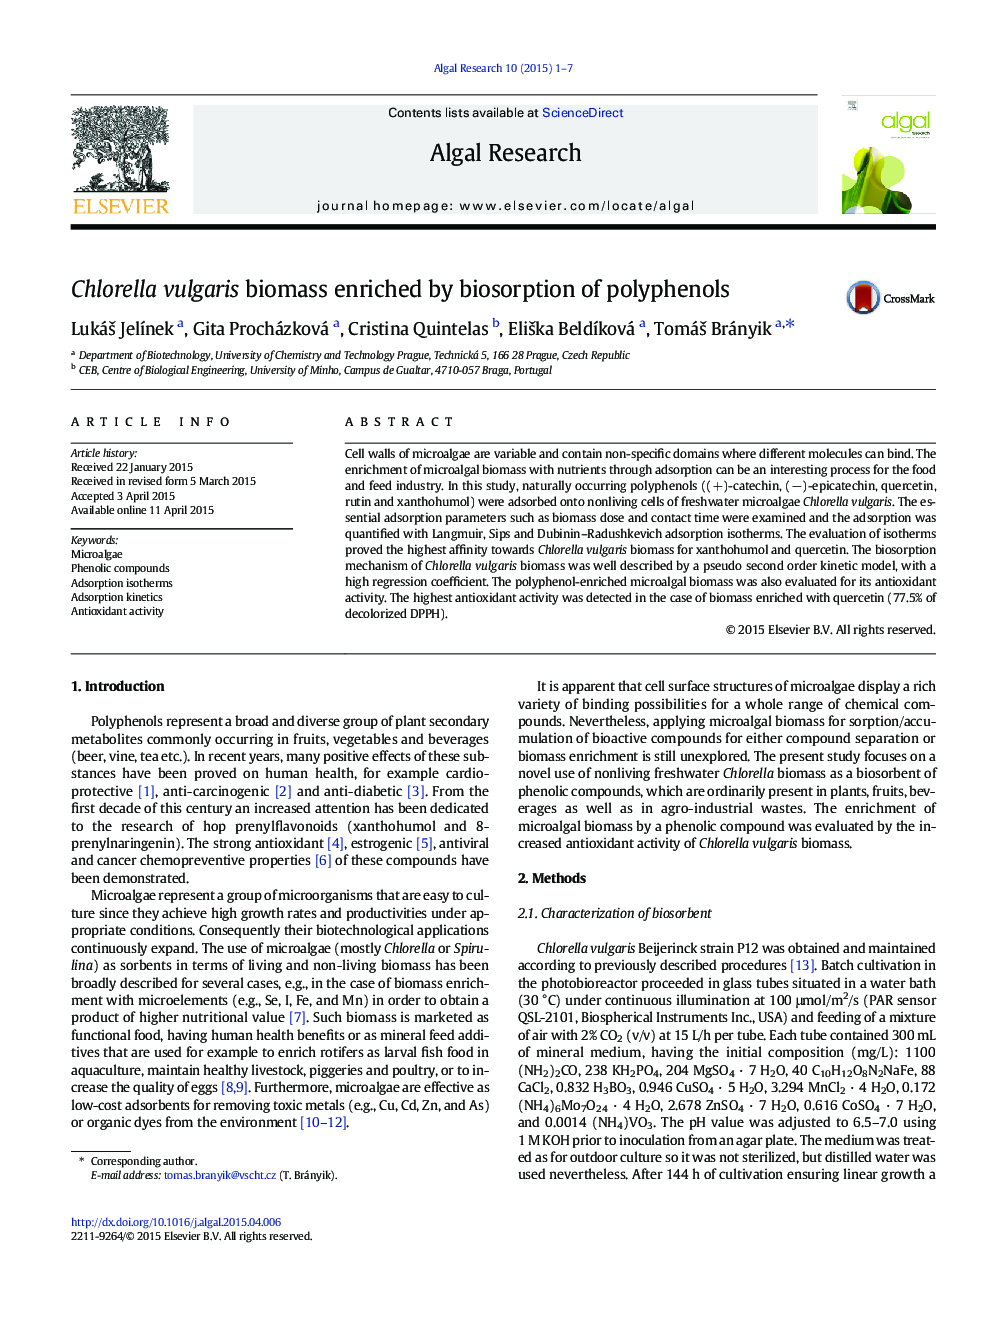 Chlorella vulgaris biomass enriched by biosorption of polyphenols